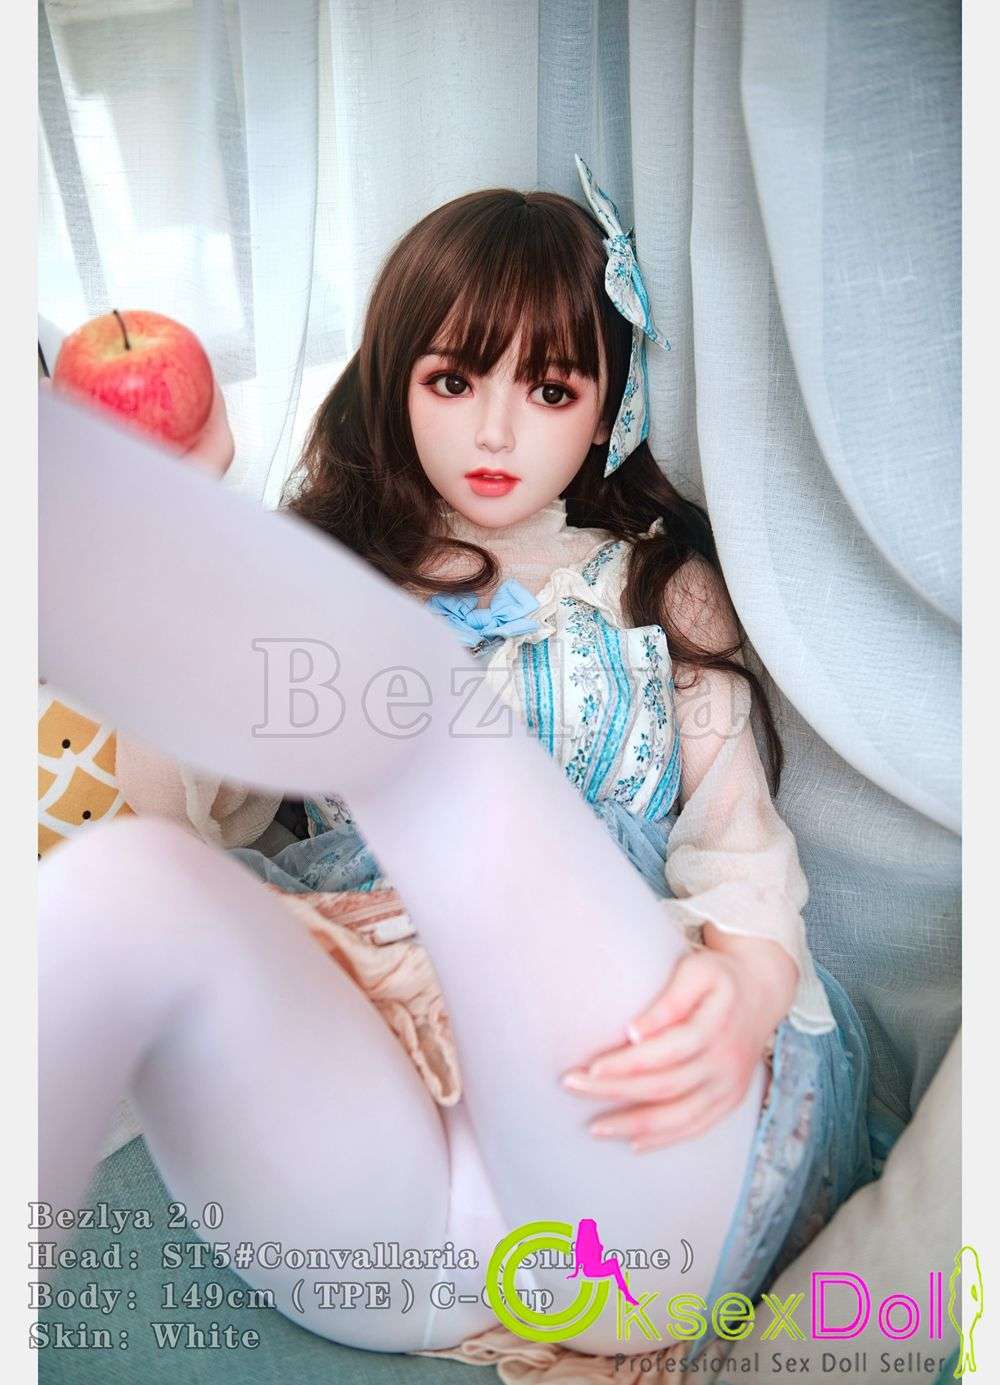 Normal-sized Boobs sex doll Photos